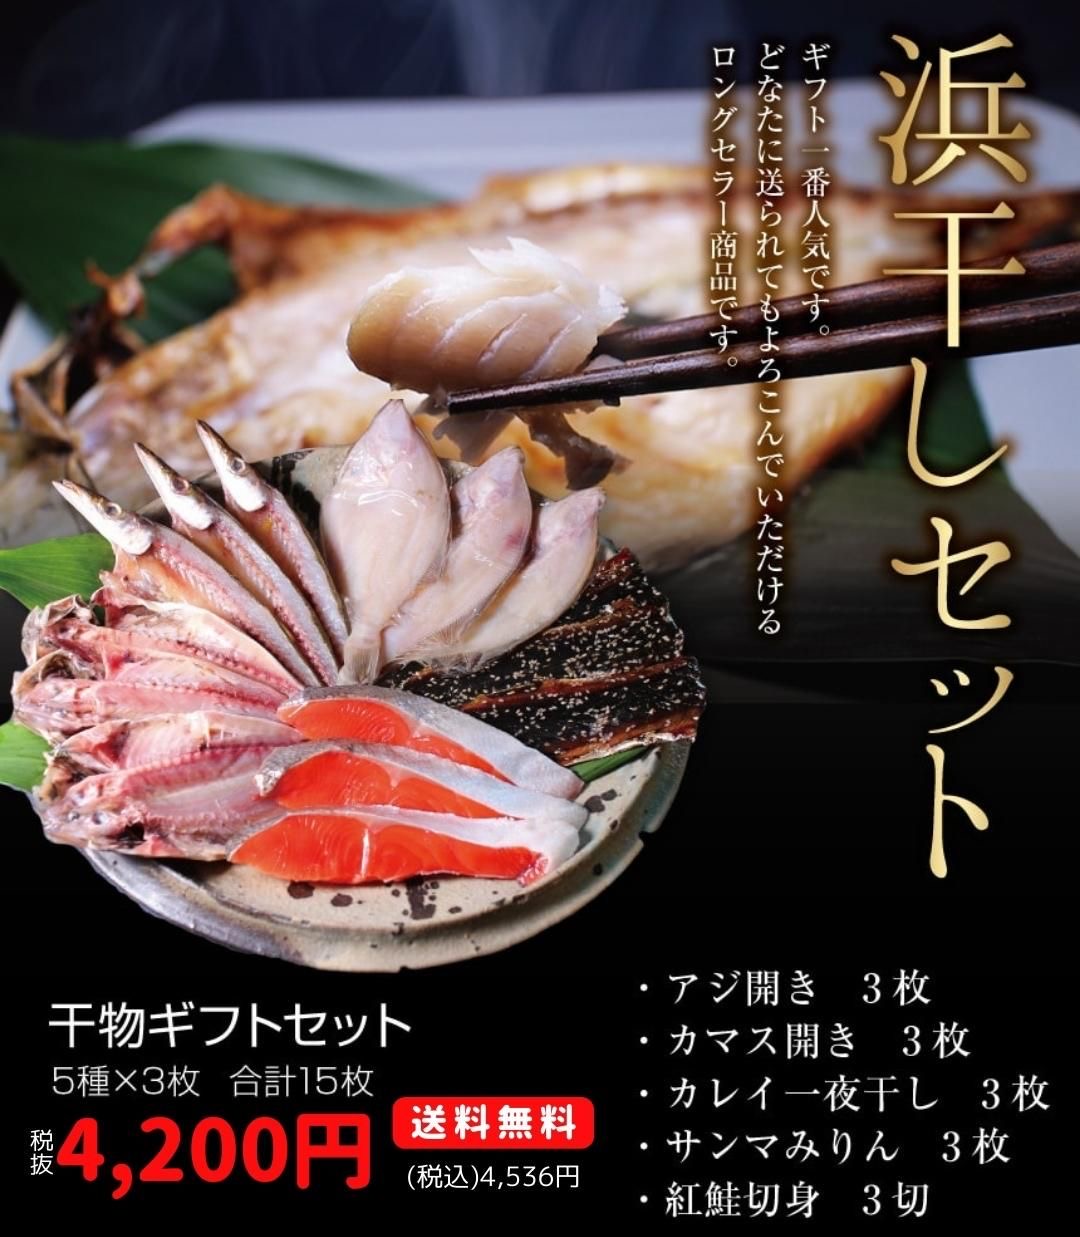 Amazon.co.jp: カレイ - 干物・燻製 / 生鮮魚介類・水産加工品